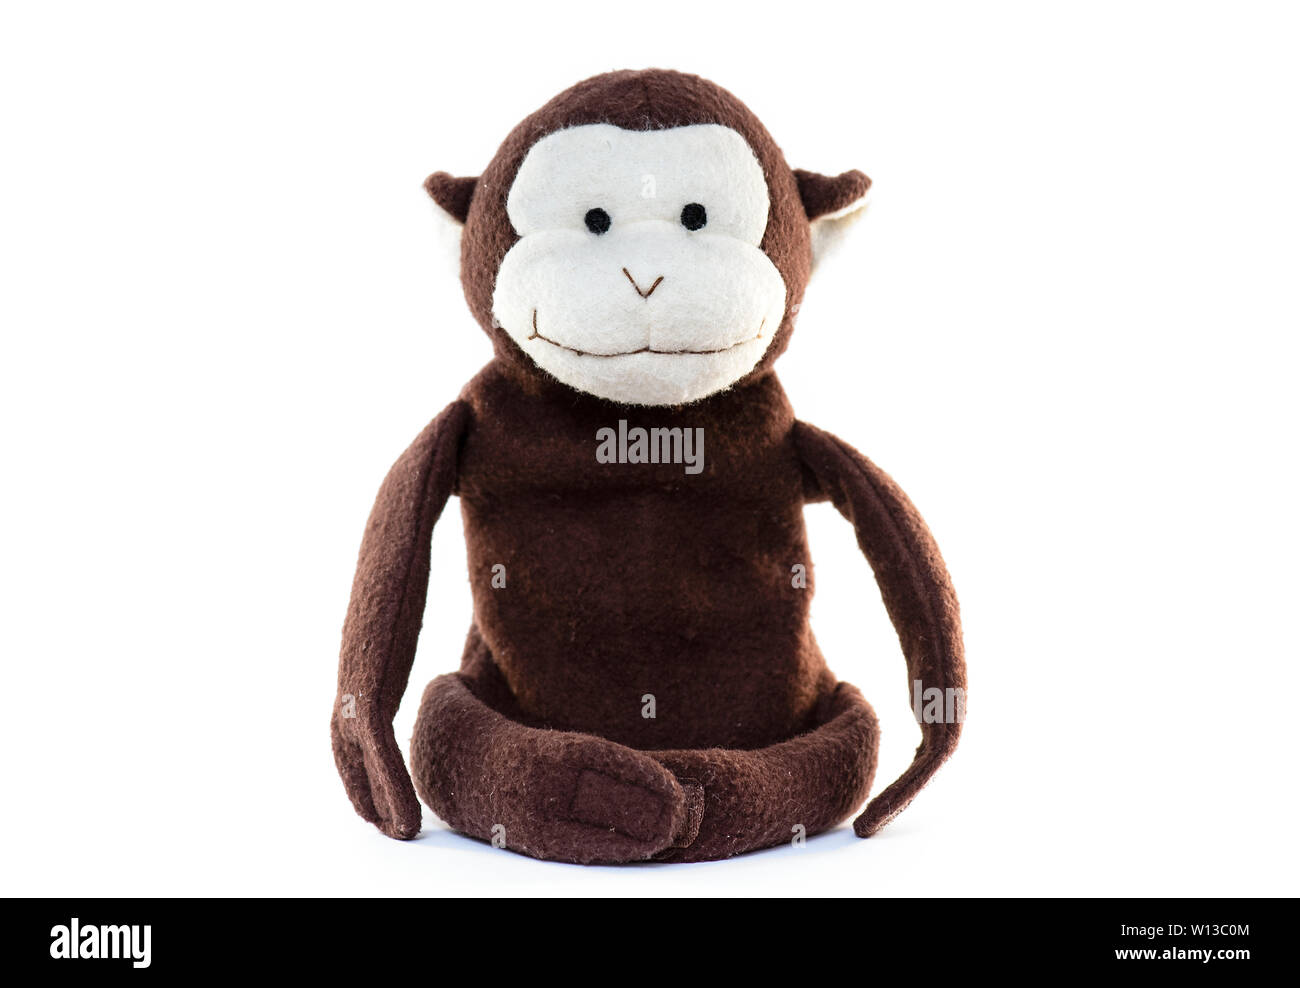 Old Monkey Doll Toy isolated on white Background Stock Photo